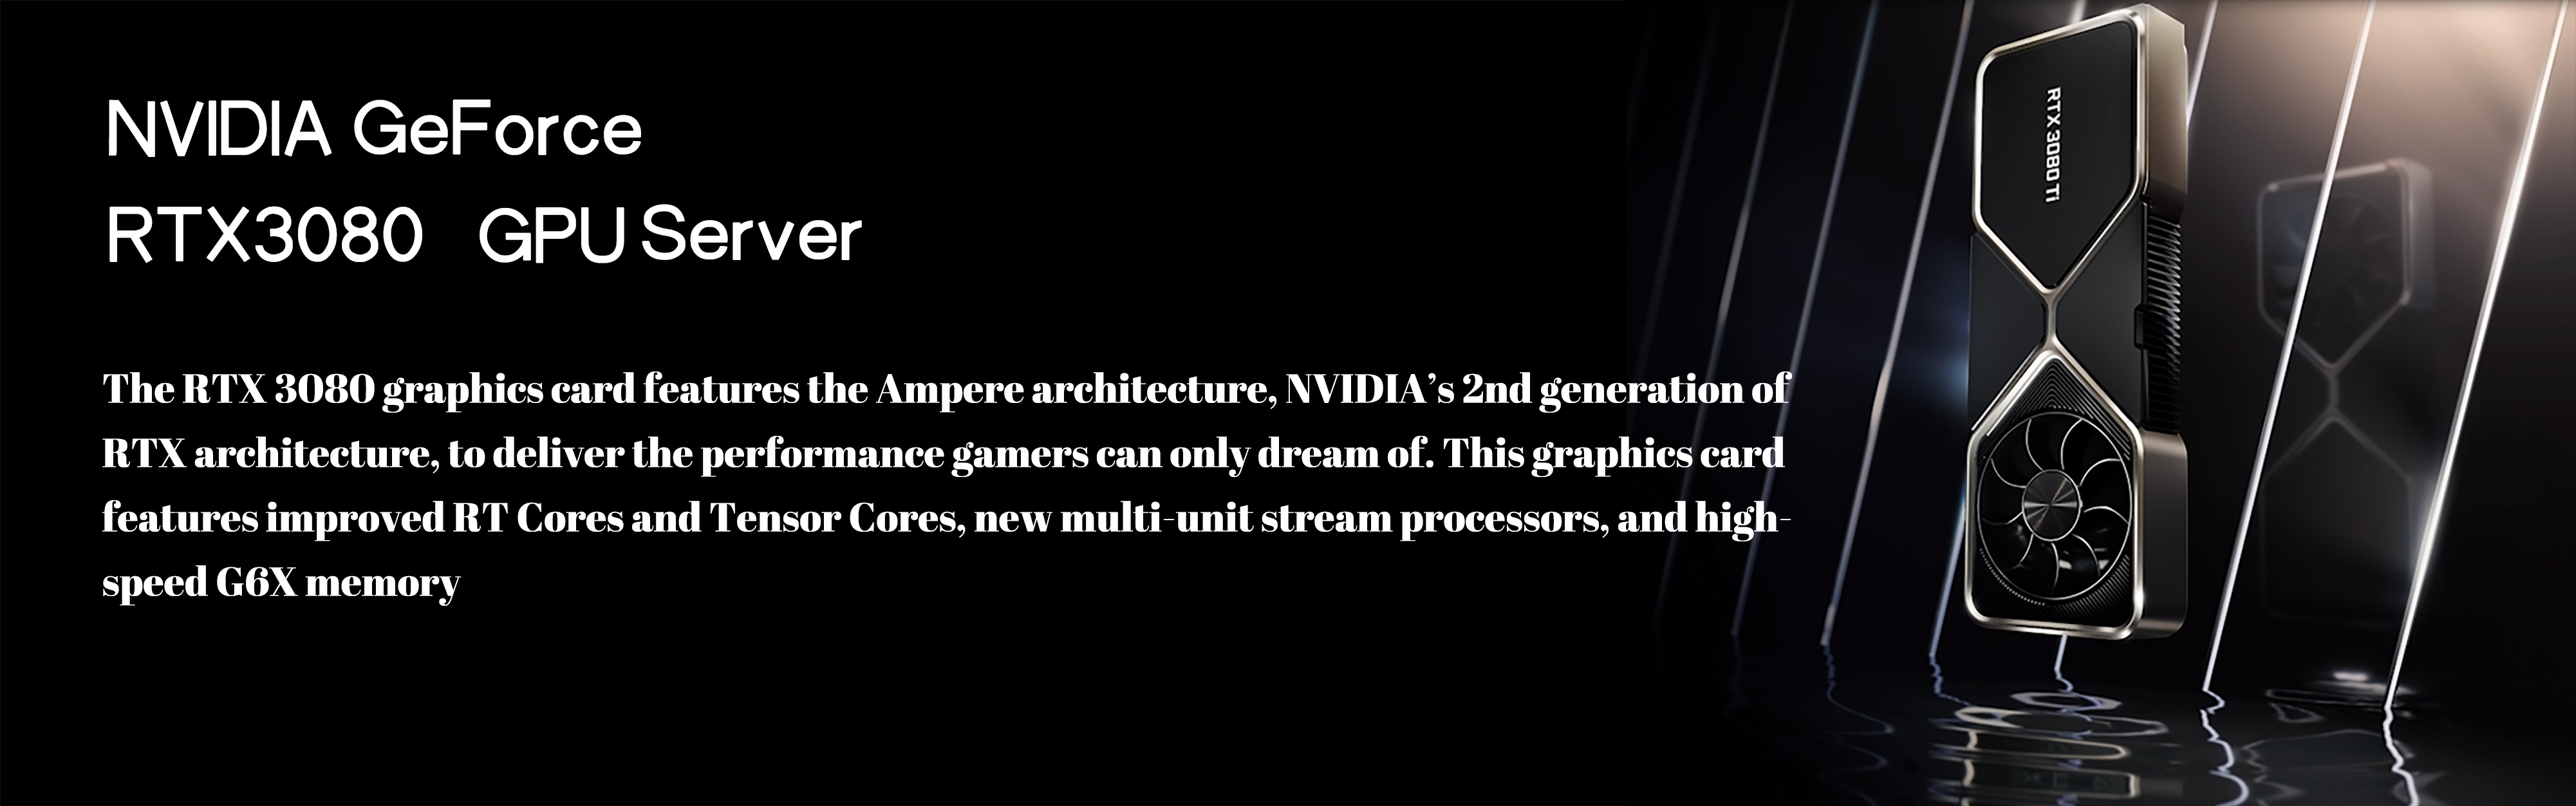 Nvidia Geforce RTX3080 GPU Server